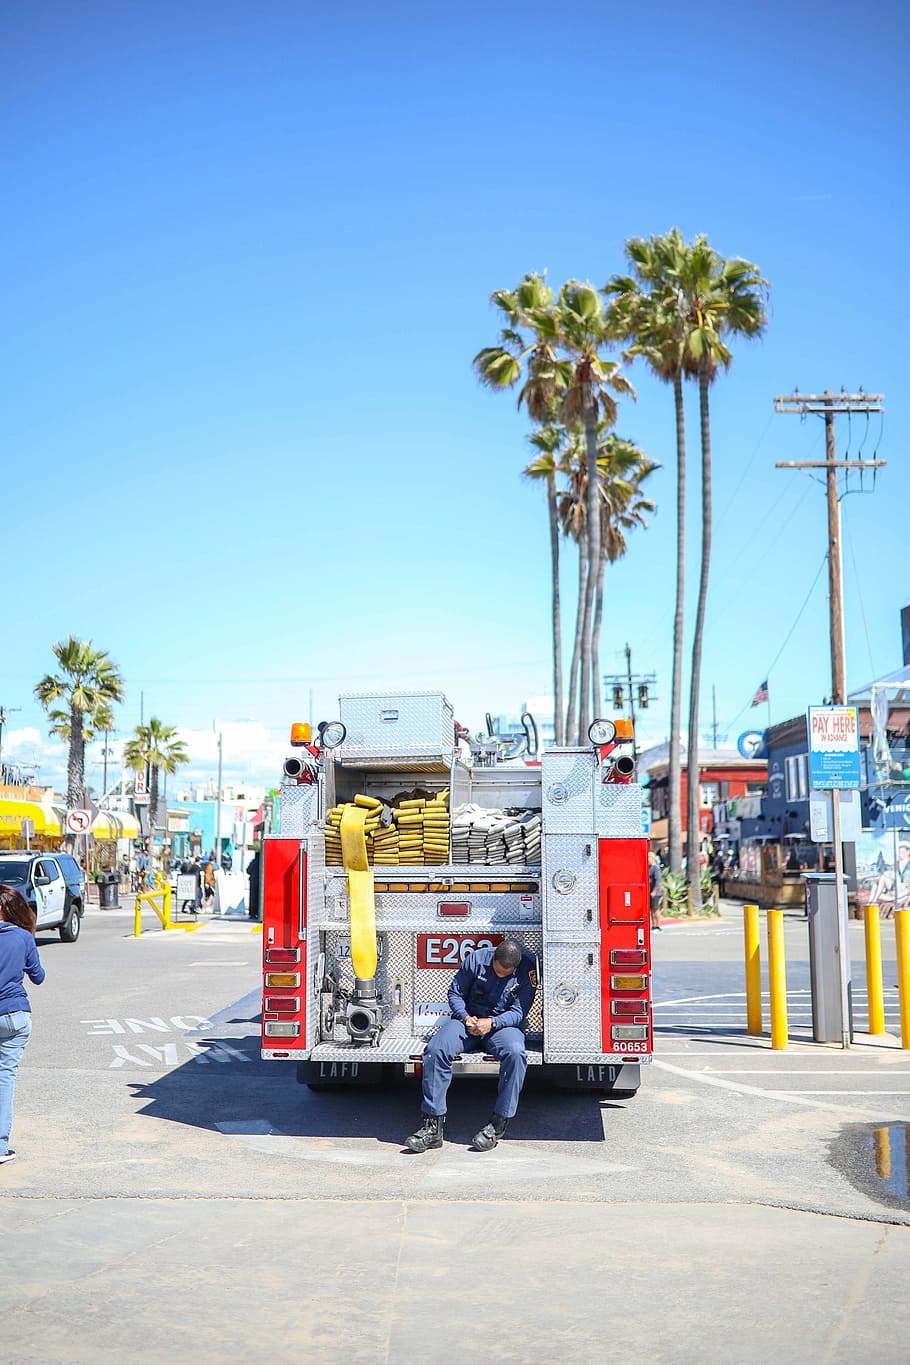 man sitting on fire truck, fire truck near palm trees, fire fighter